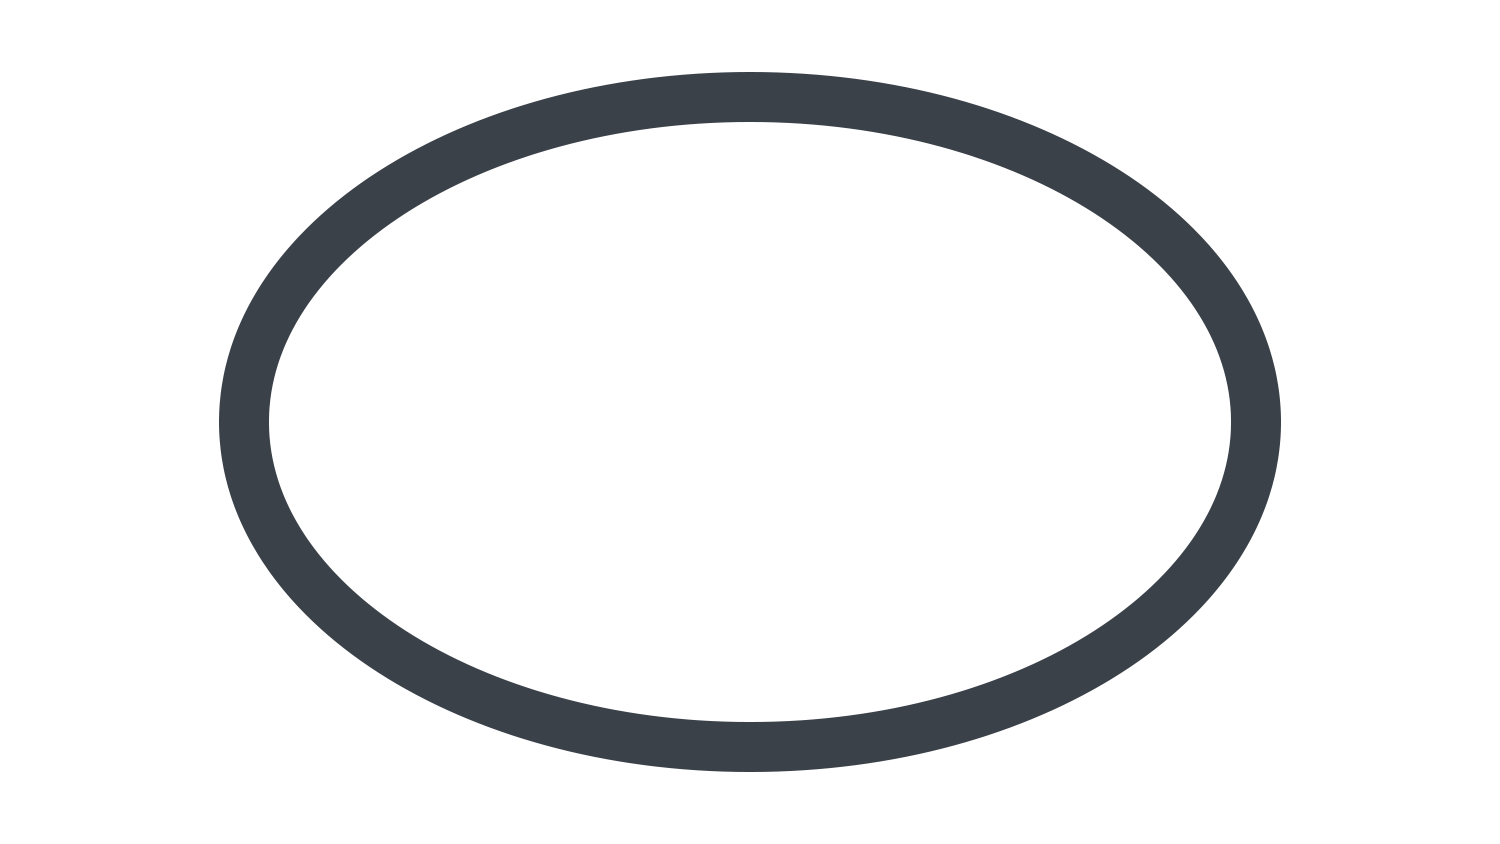 Vectorworksで楕円を描く方法